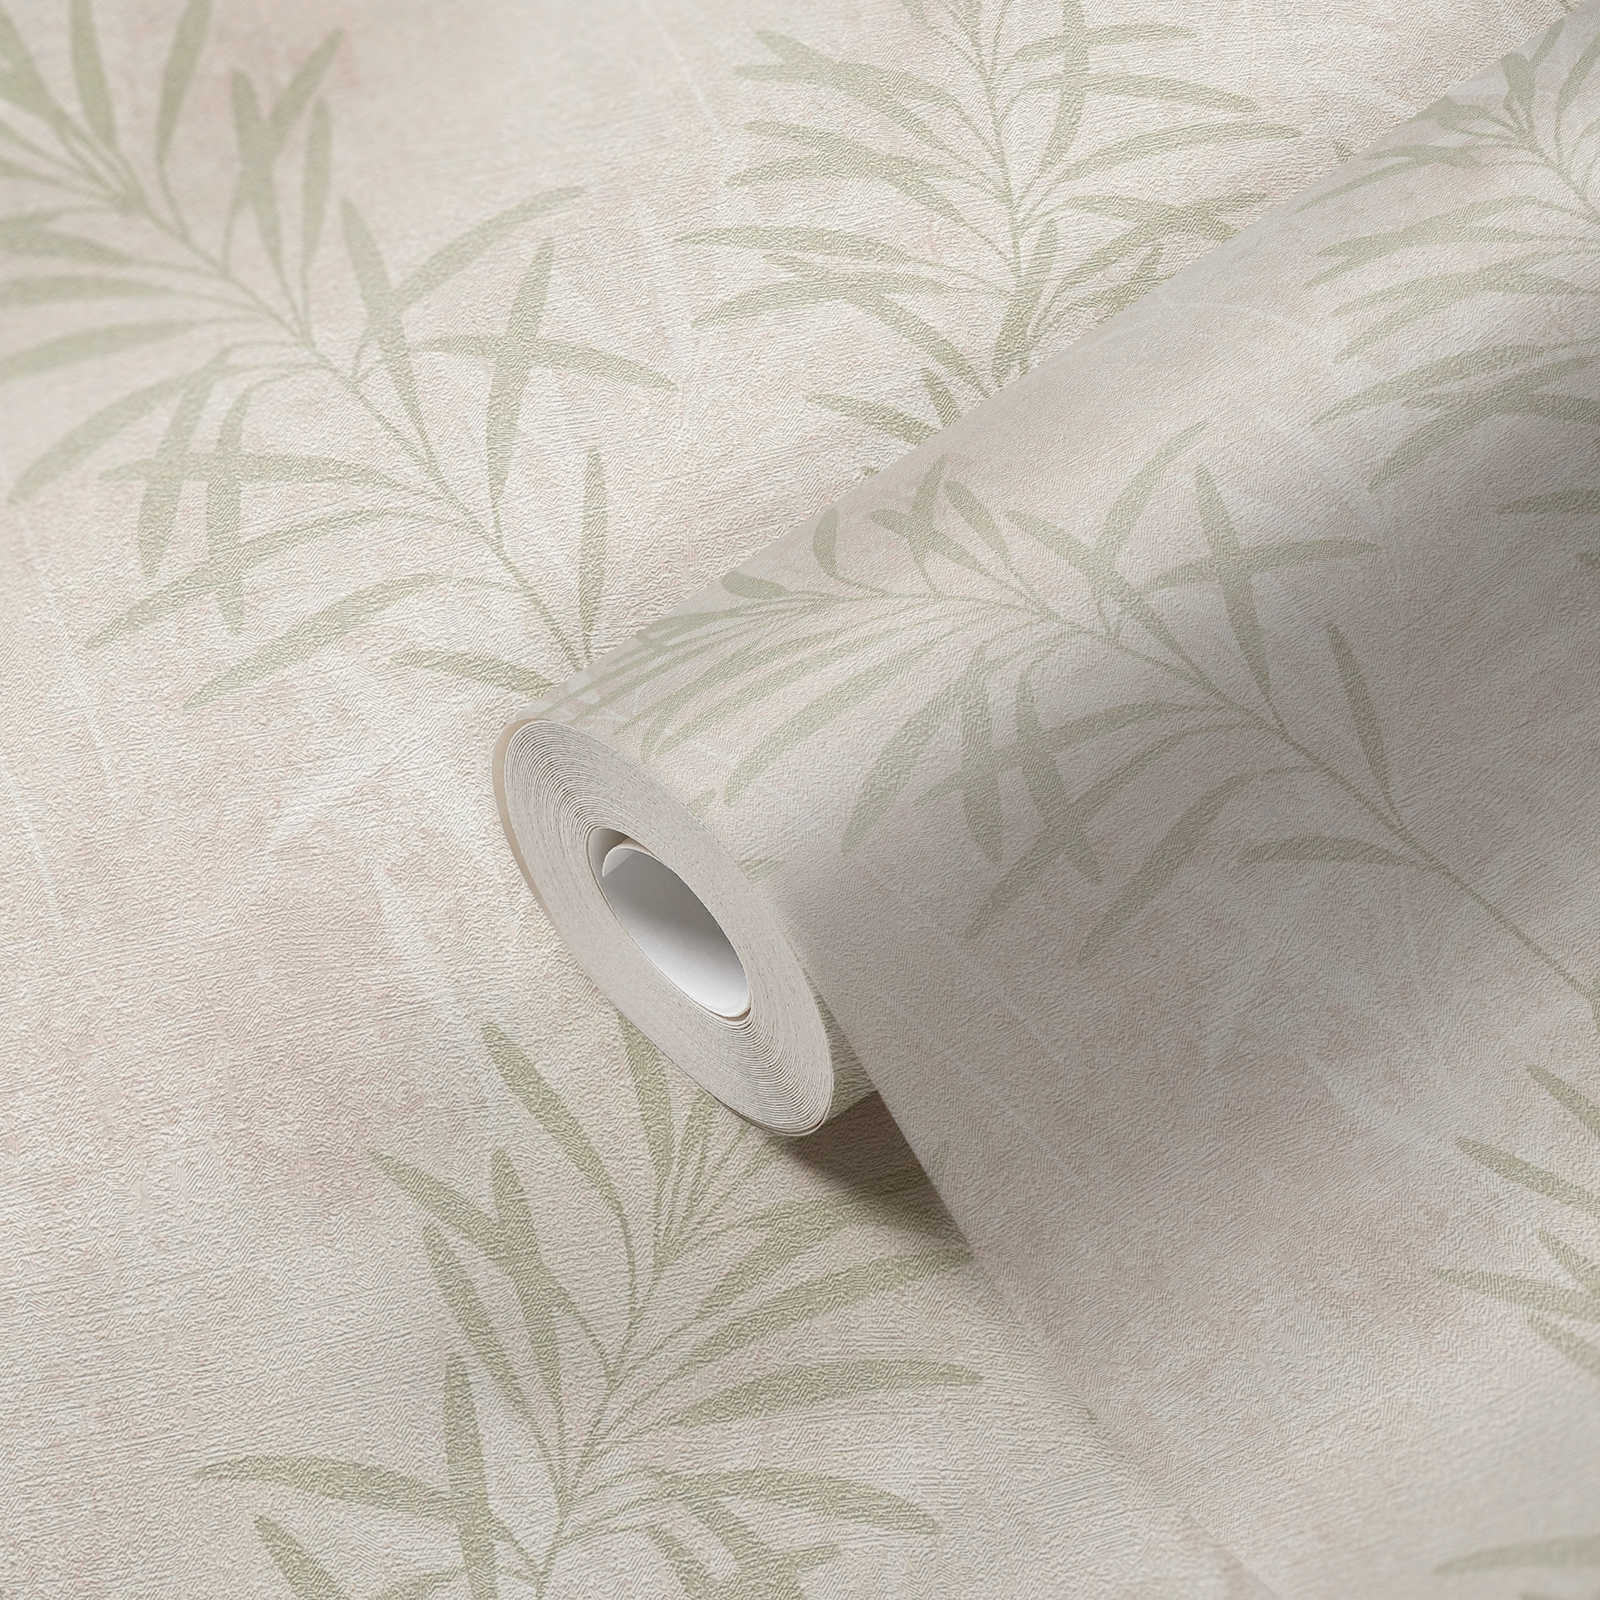             Scandinavian style non-woven wallpaper with floral grasses - cream, green, metallic
        